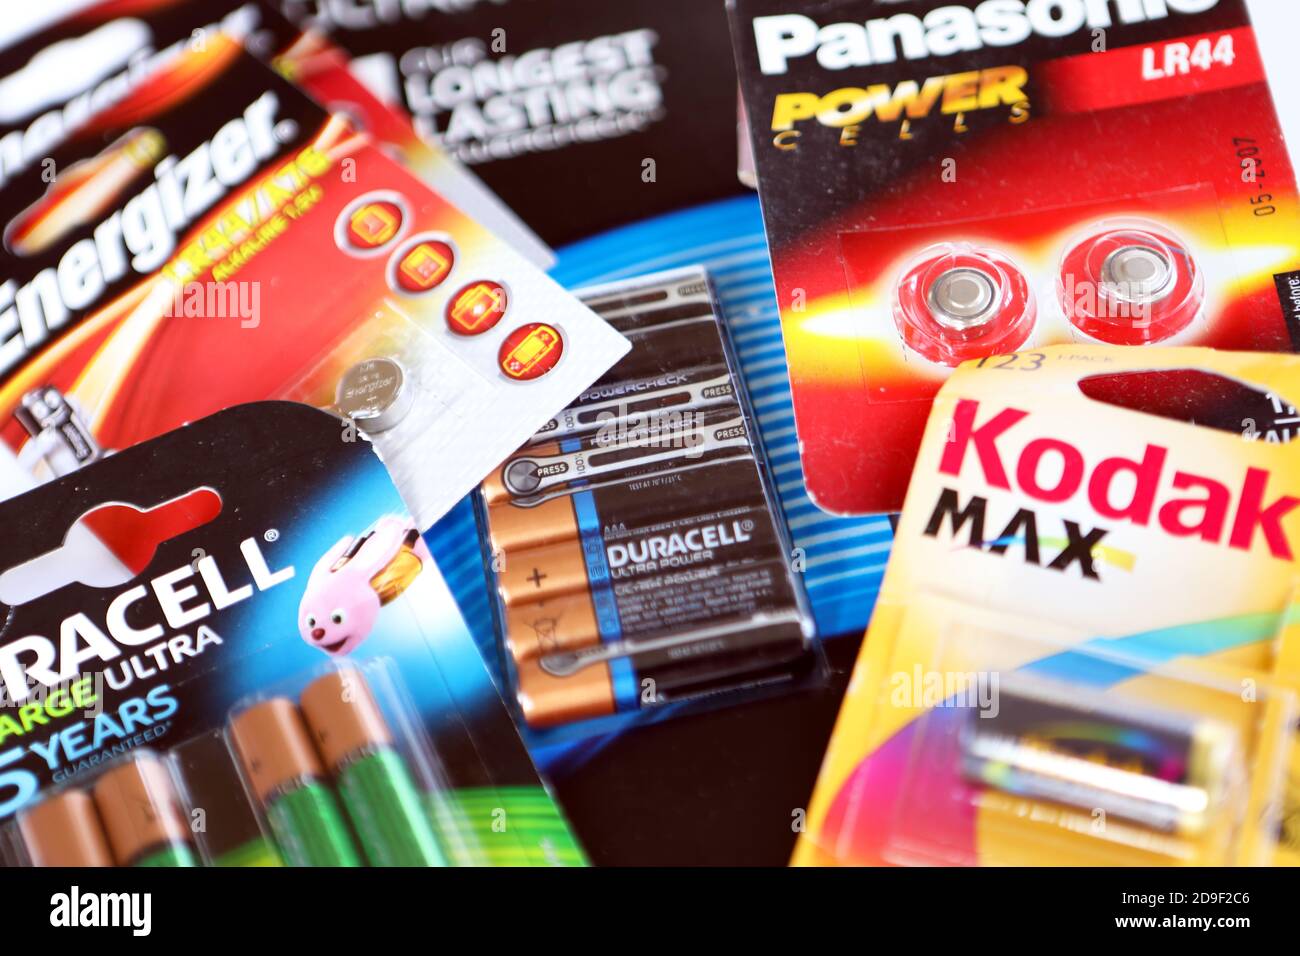 Various types and makes of batteries including Duracell, Kodak, Panasonic, Energiser Stock Photo